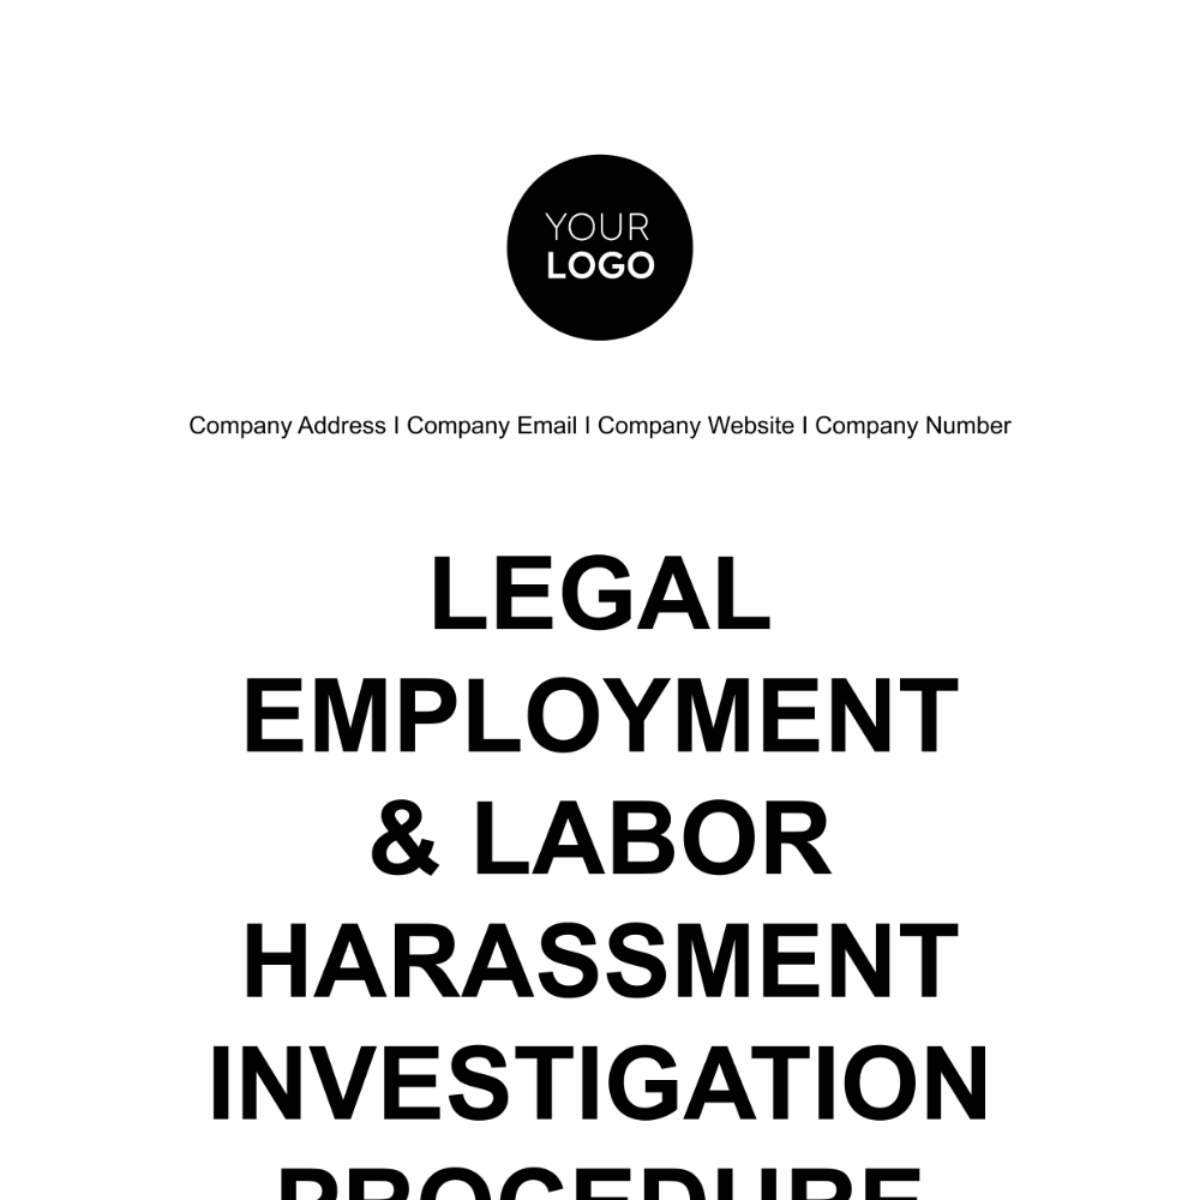 Legal Employment & Labor Harassment Investigation Procedure Template